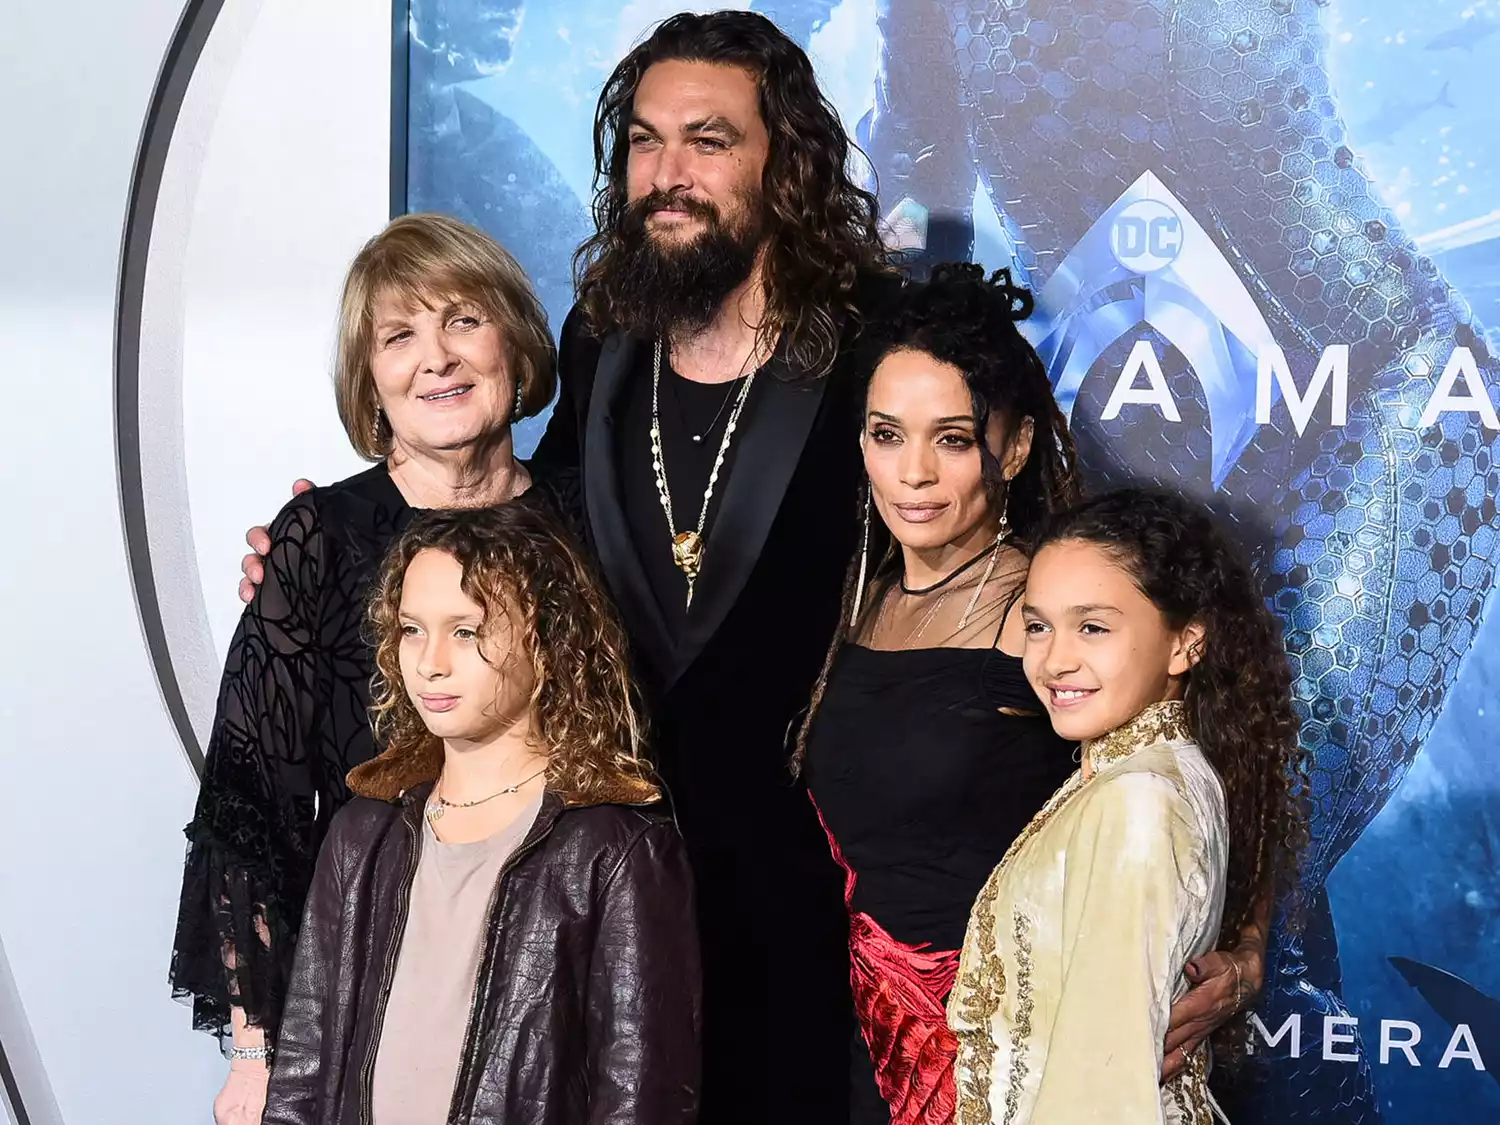 Coni Momoa, Jason Momoa, Nakoa-Wolf Manakauapo Namakaeha Momoa, Lisa Bonet, and Lola Iolani Momoa attends the premiere of "Aquaman" on December 12, 2018 in Hollywood, California.